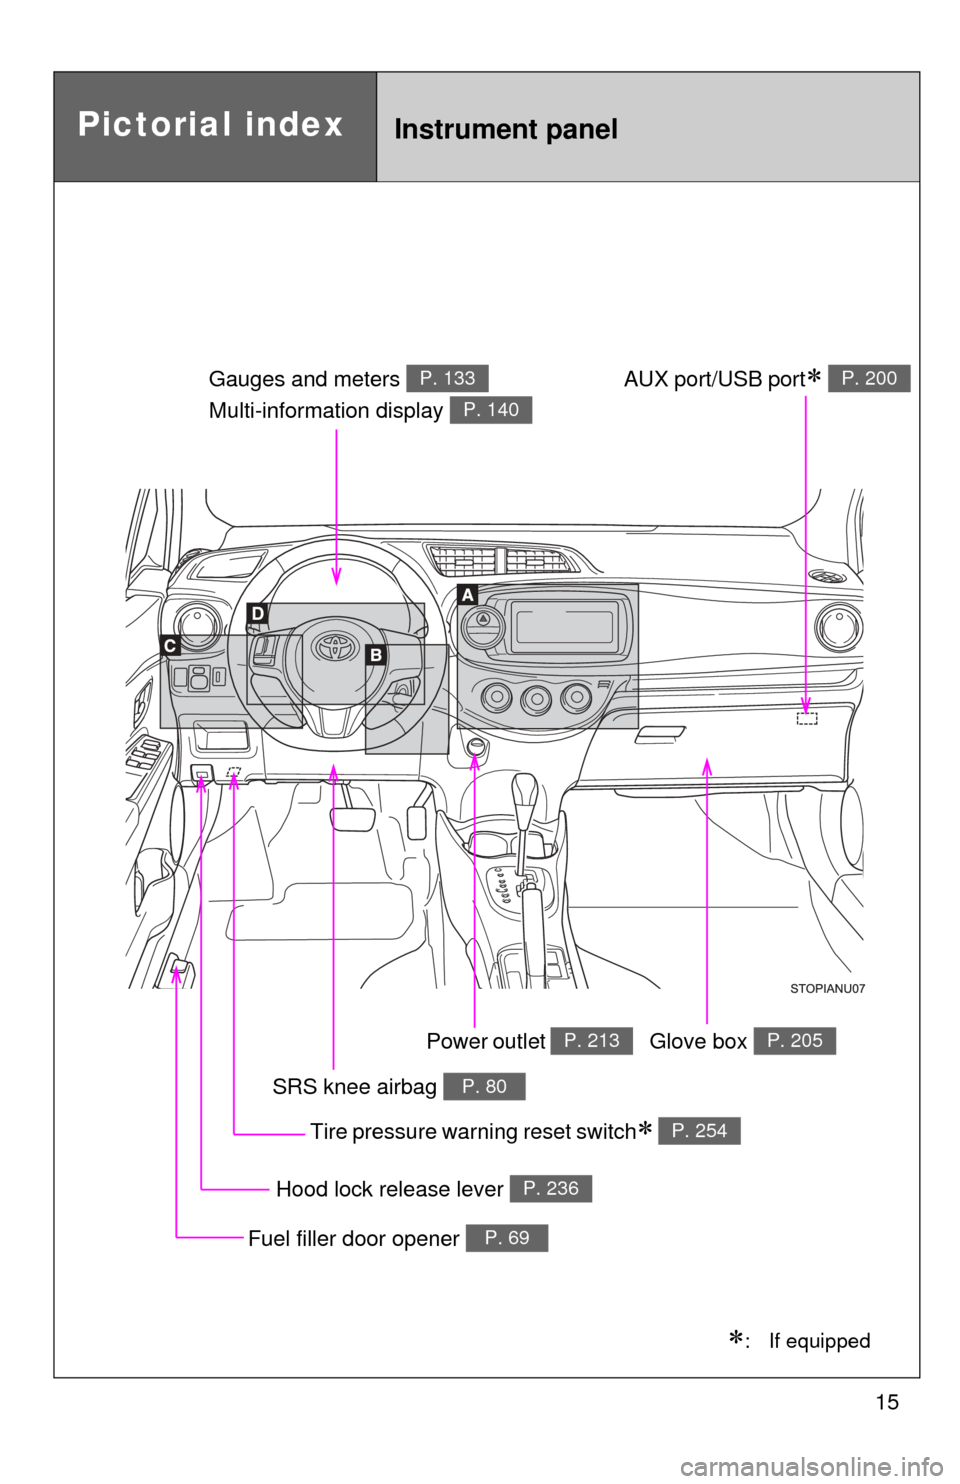 TOYOTA YARIS 2012 3.G Owners Manual 15
Pictorial indexInstrument panel
SRS knee airbag P. 80
Hood lock release lever P. 236
Gauges and meters 
Multi-information display P. 133
P. 140
Glove box P. 205
Fuel filler door opener P. 69
: I